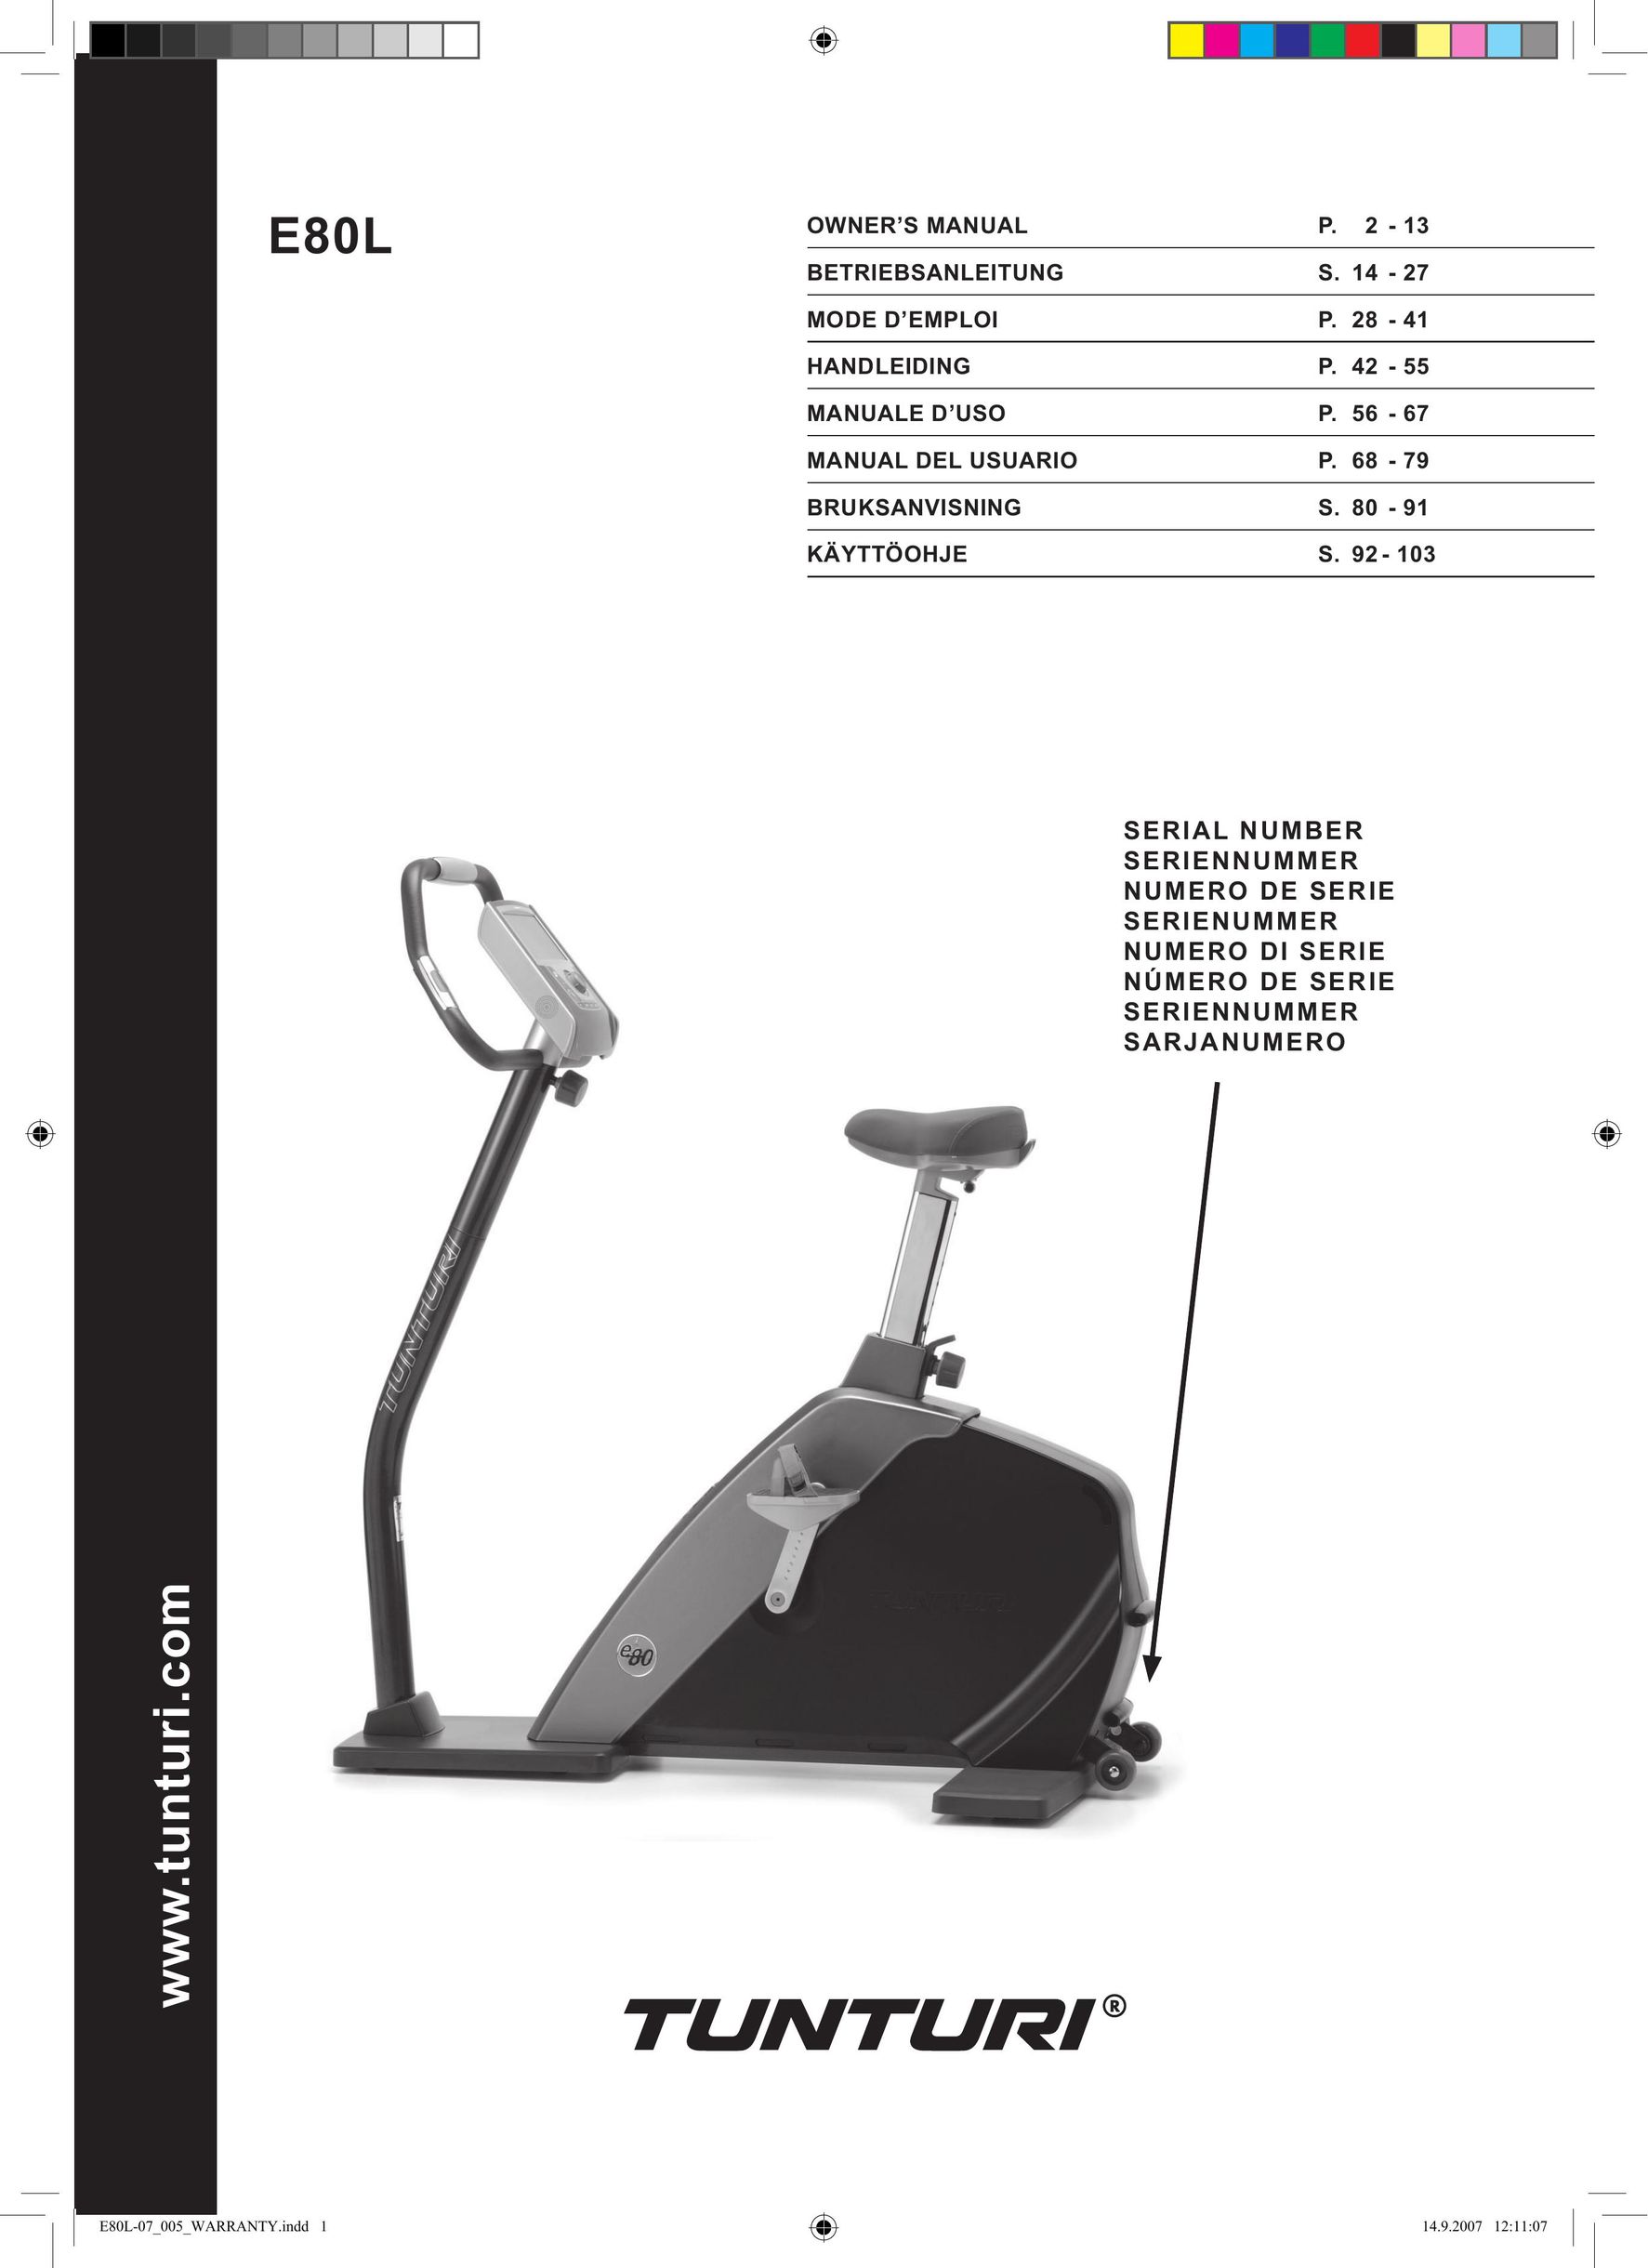 Tunturi E80L Home Gym User Manual